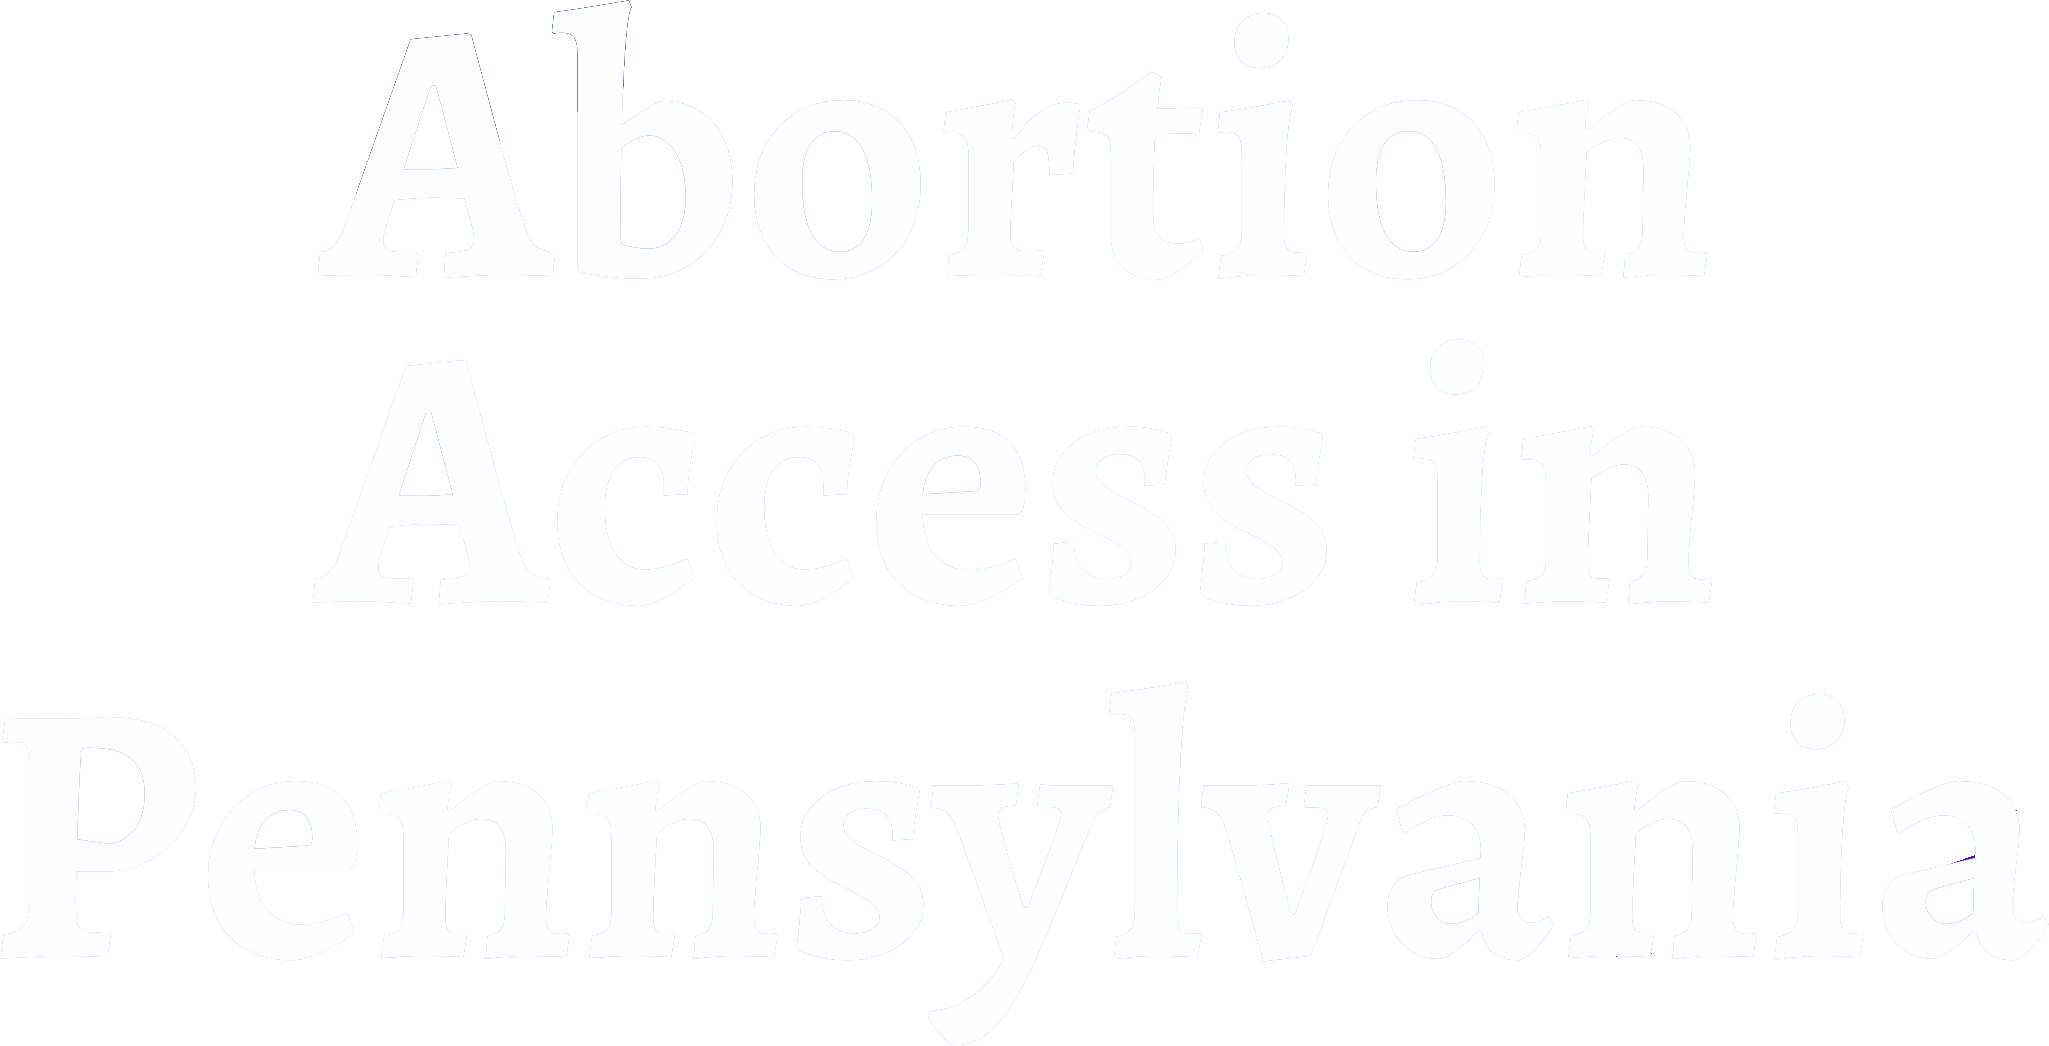 Abortion Access in Pennsylvania